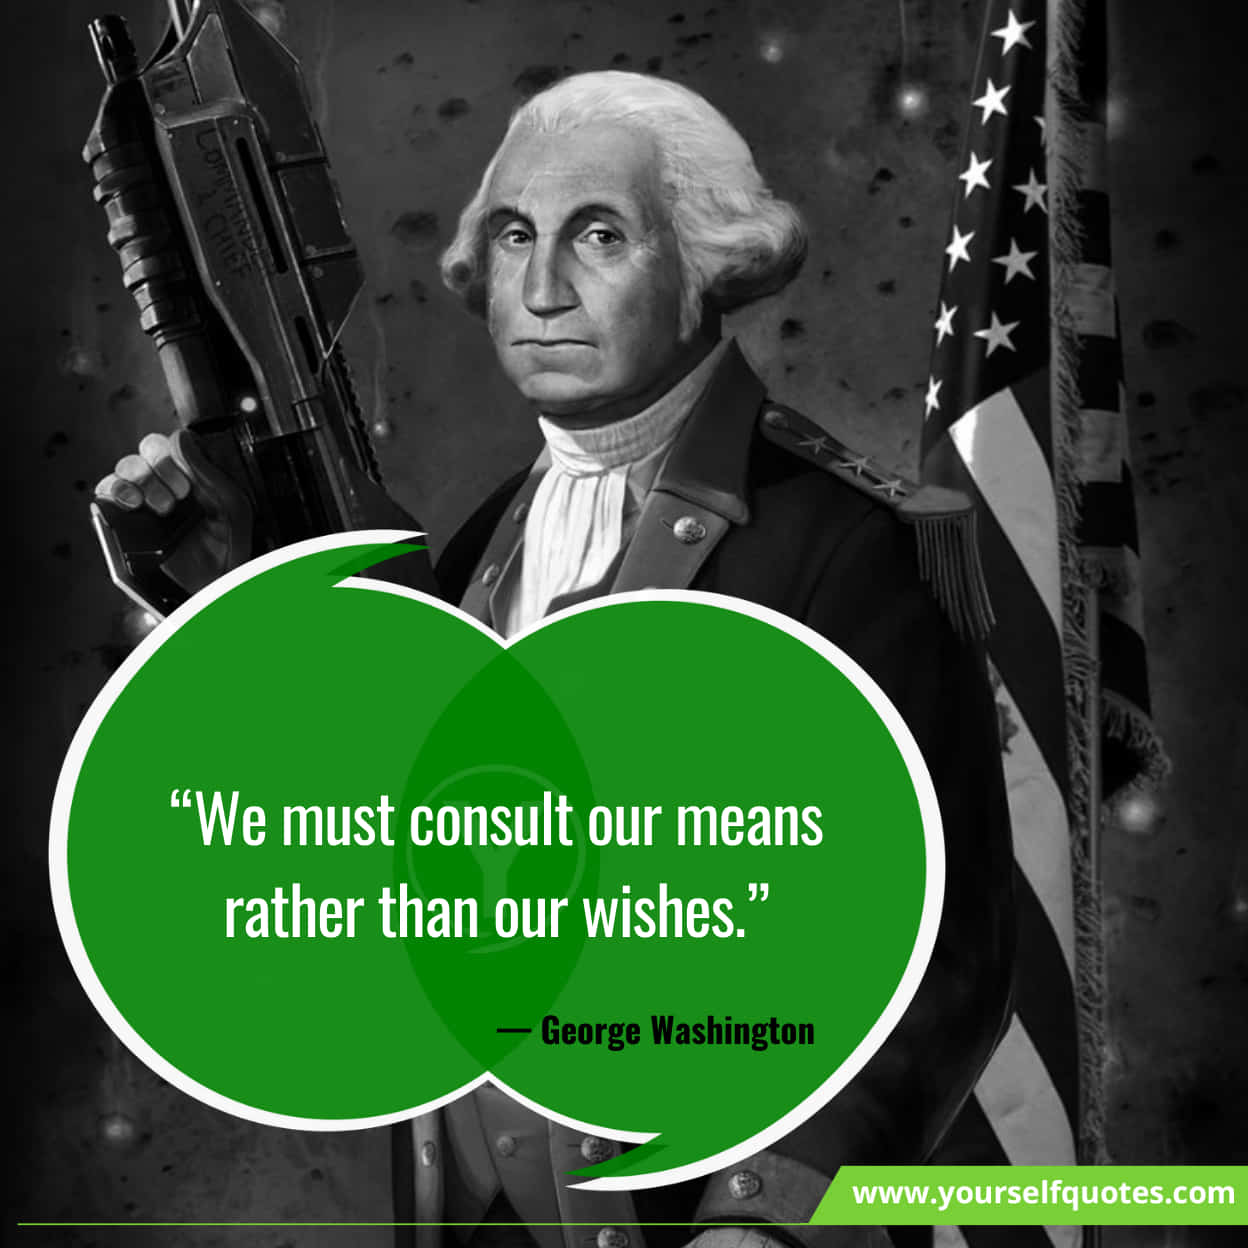 George Washington Quotes About Failure